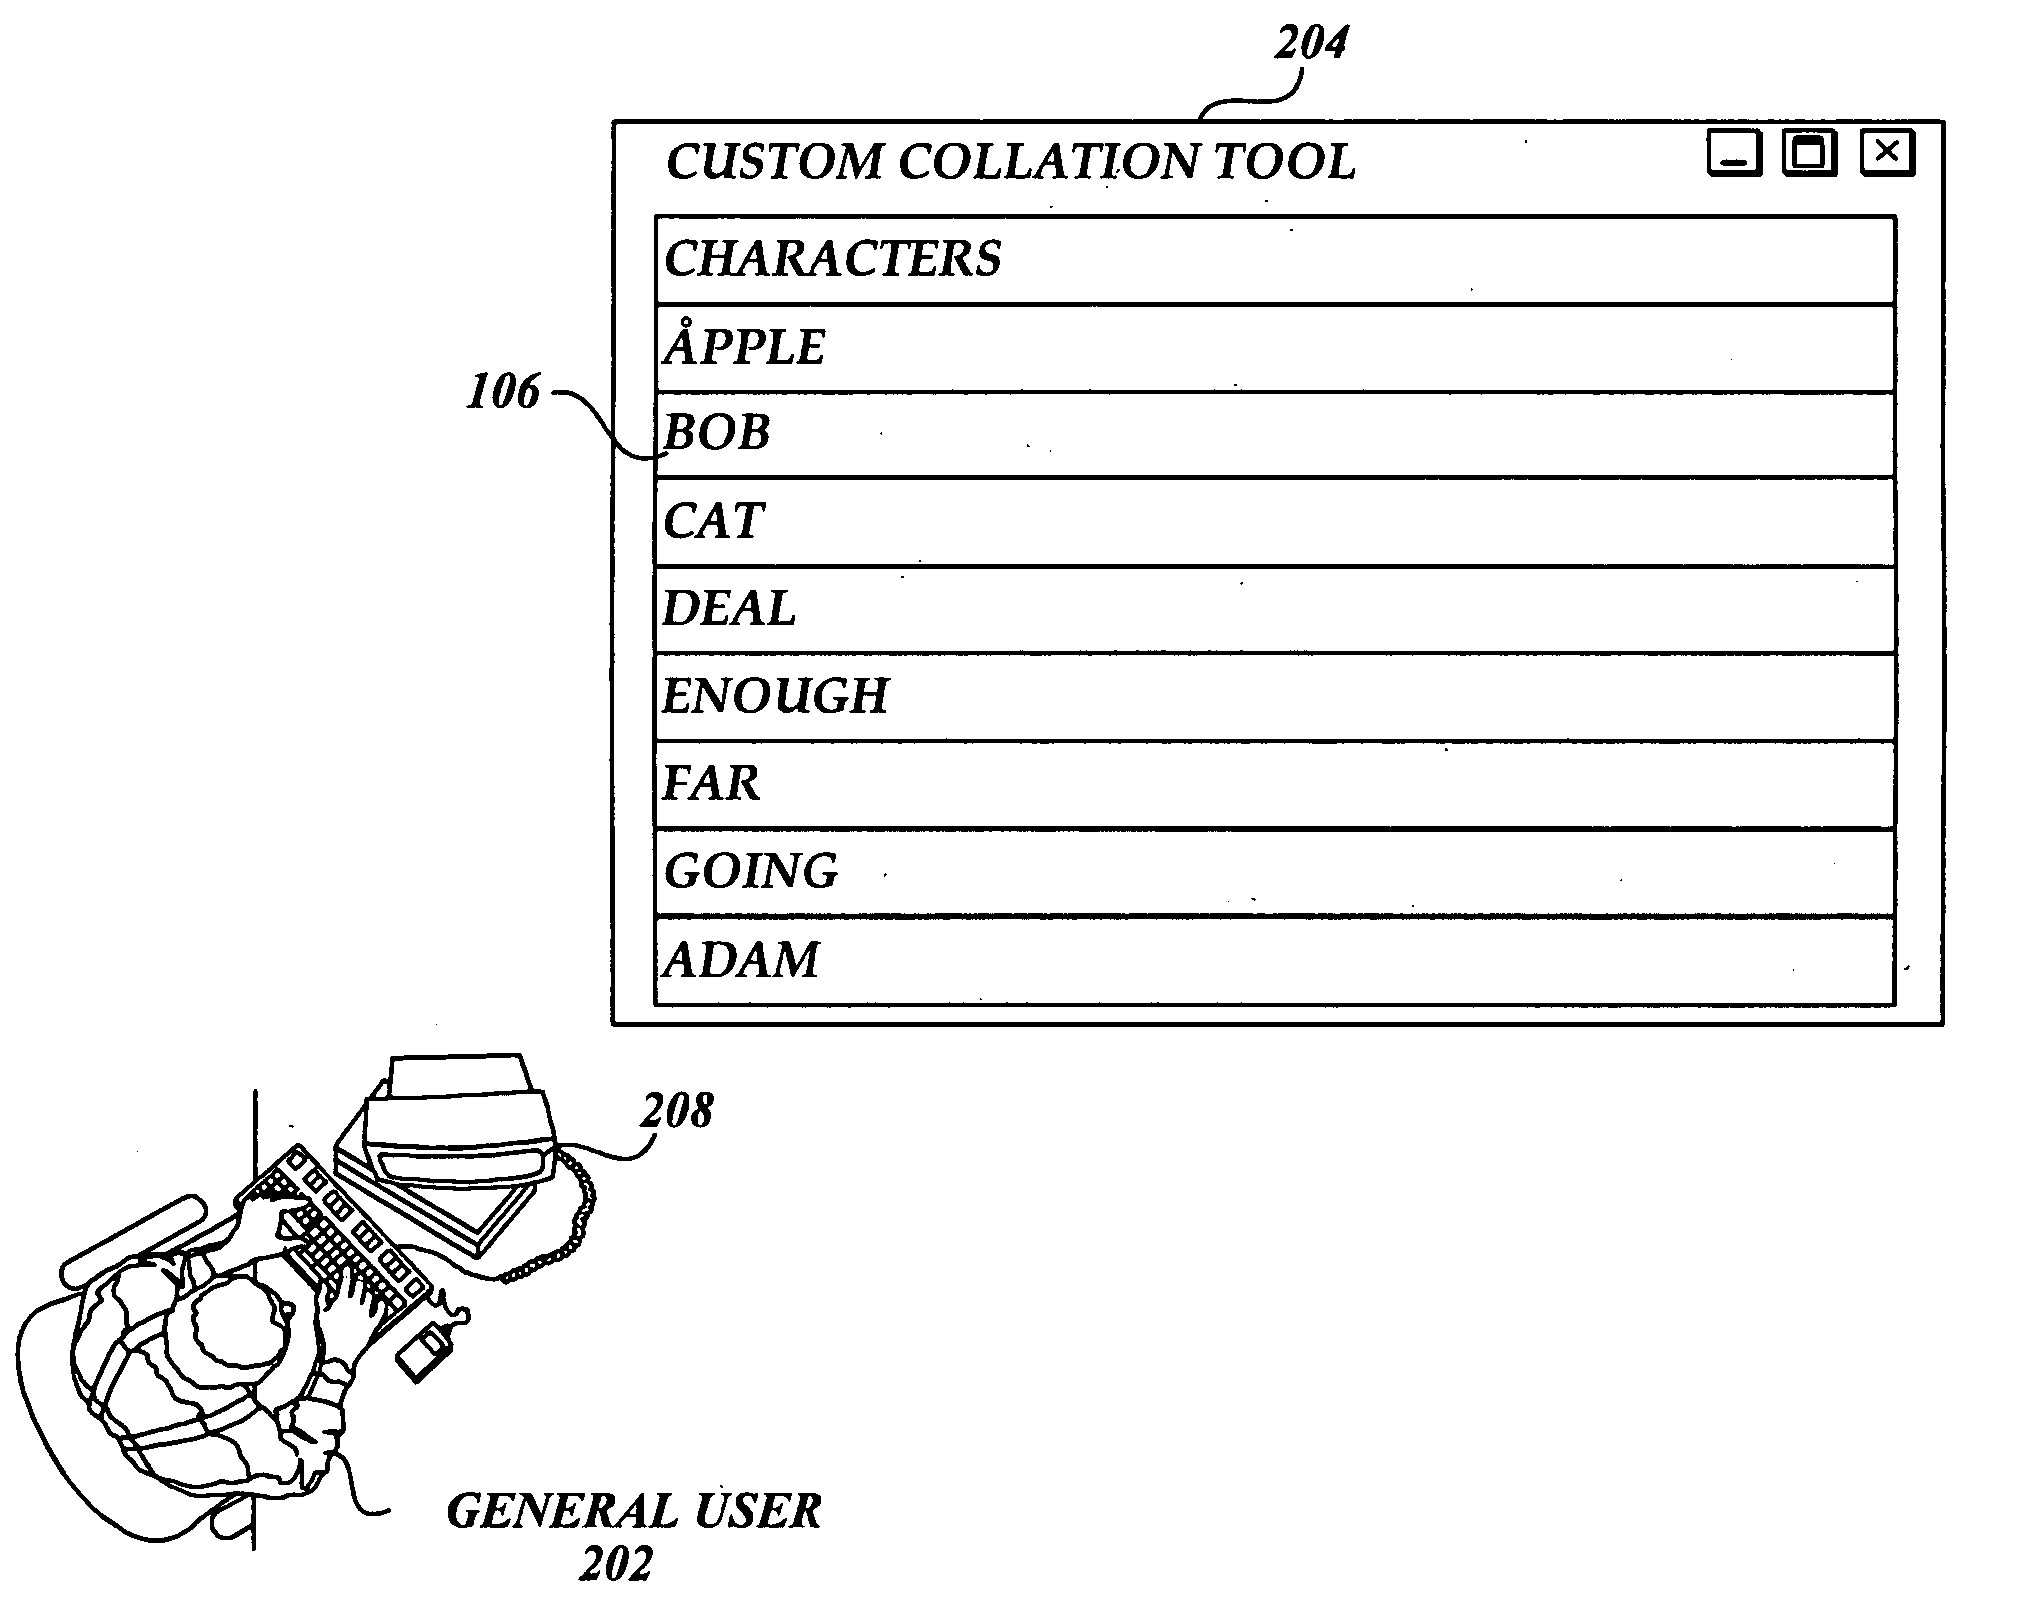 Custom collation tool